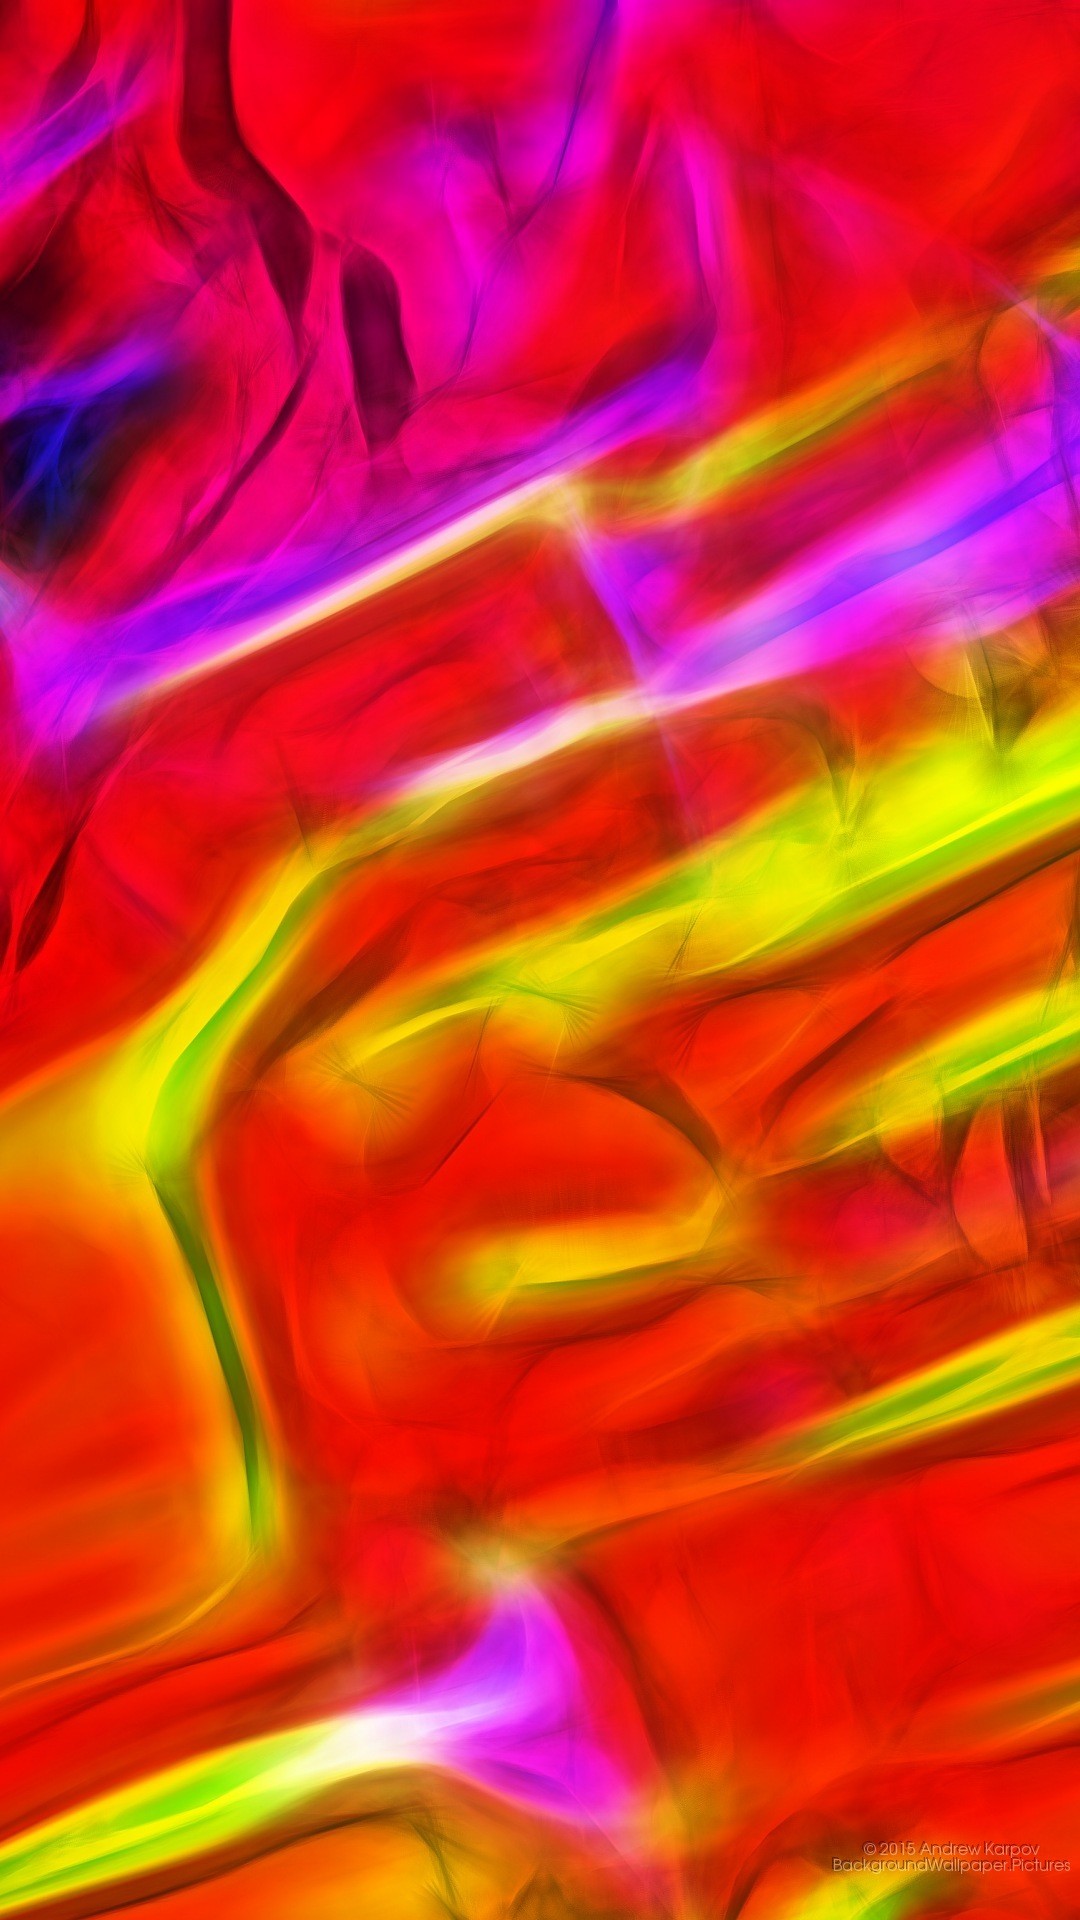 asus zenfone 2 laser wallpaper,red,light,colorfulness,orange,magenta